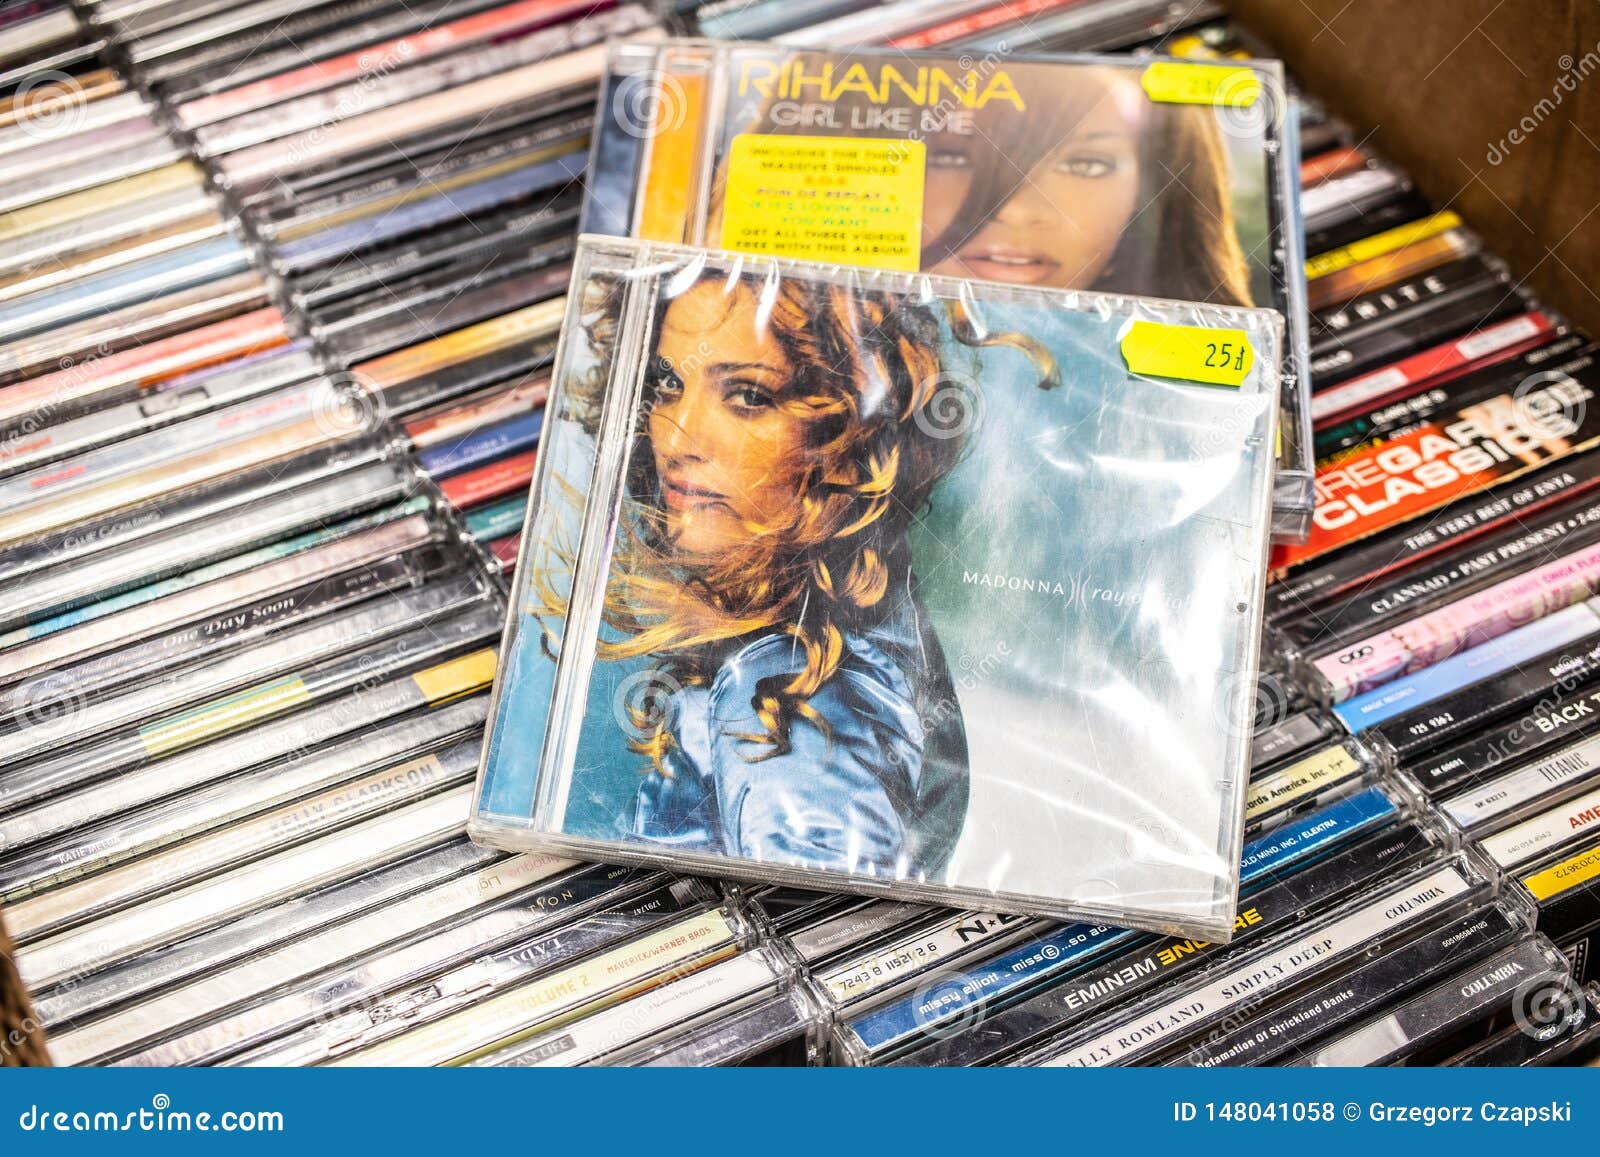 Madonna CD Album Ray of Light 1998 on Display for Sale, Famous American  Musician and Singer, Foto de archivo editorial - Imagen de audio,  asombroso: 148041058